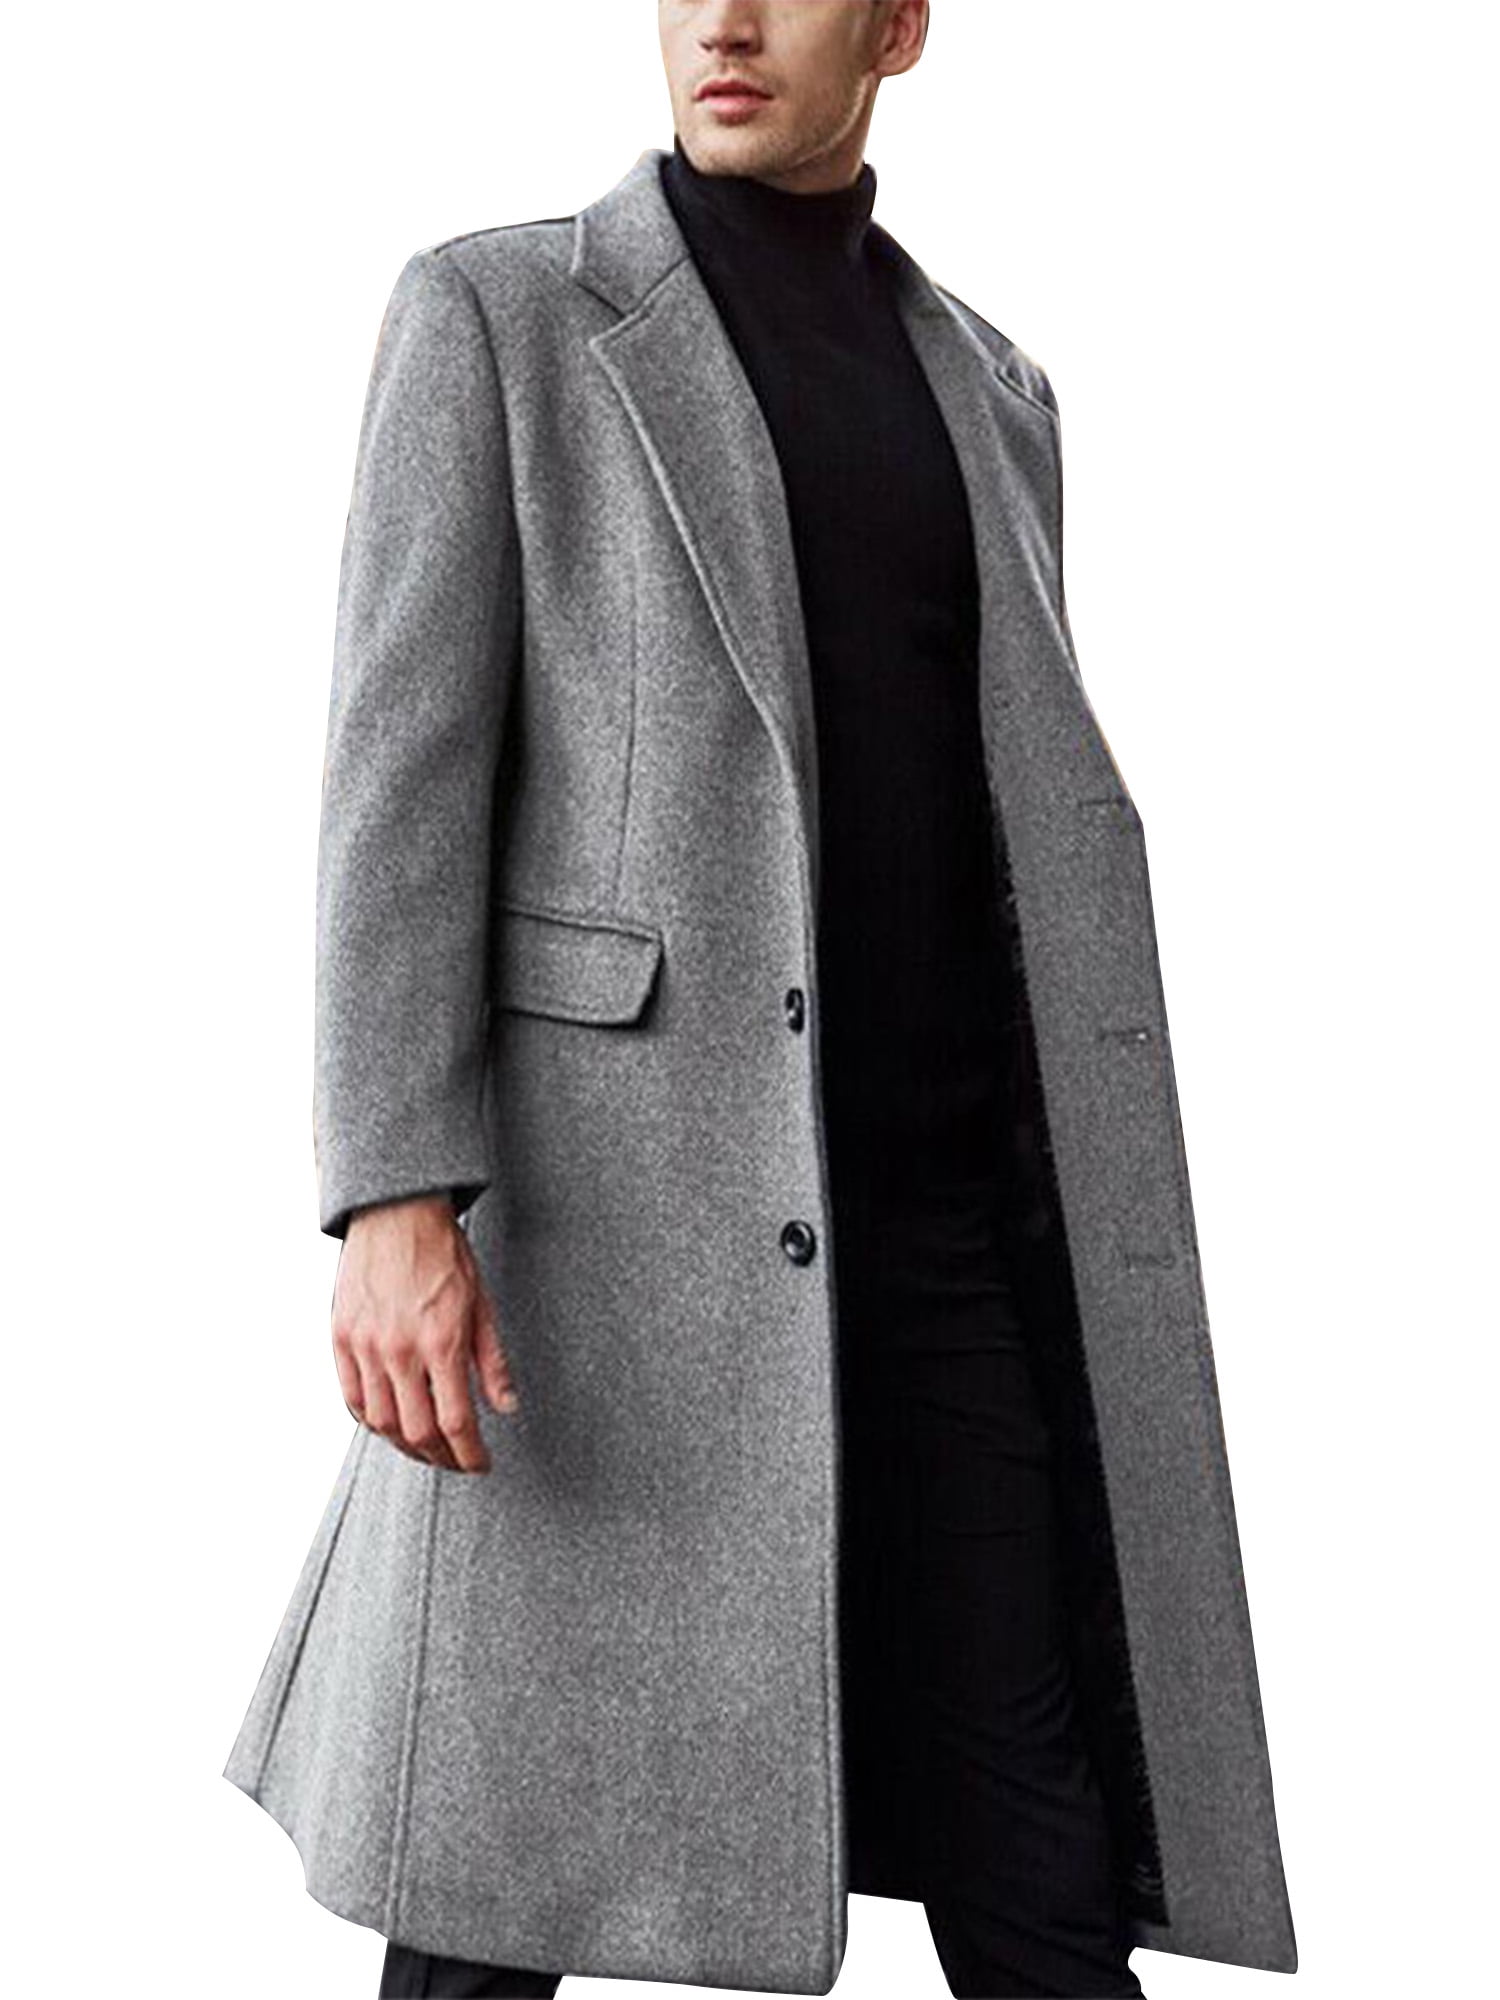 Men/'s  Outwear Overcoat Double Breasted Slim Winter Warm Trench Coat Long Jacket